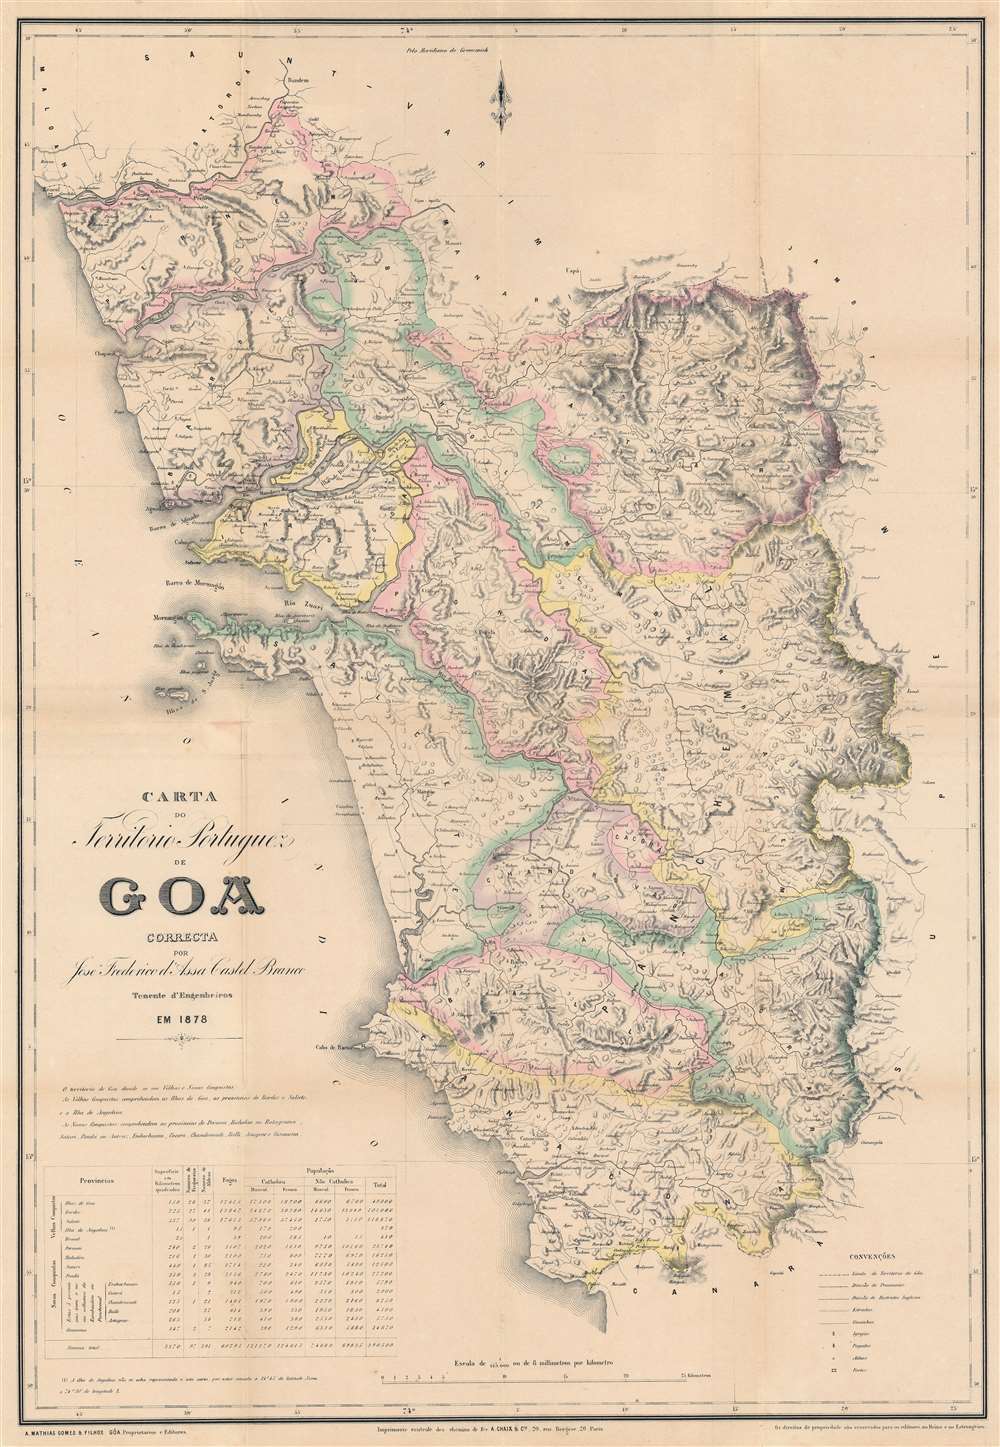 1878 Assa Castel Branco Map of Goa, India